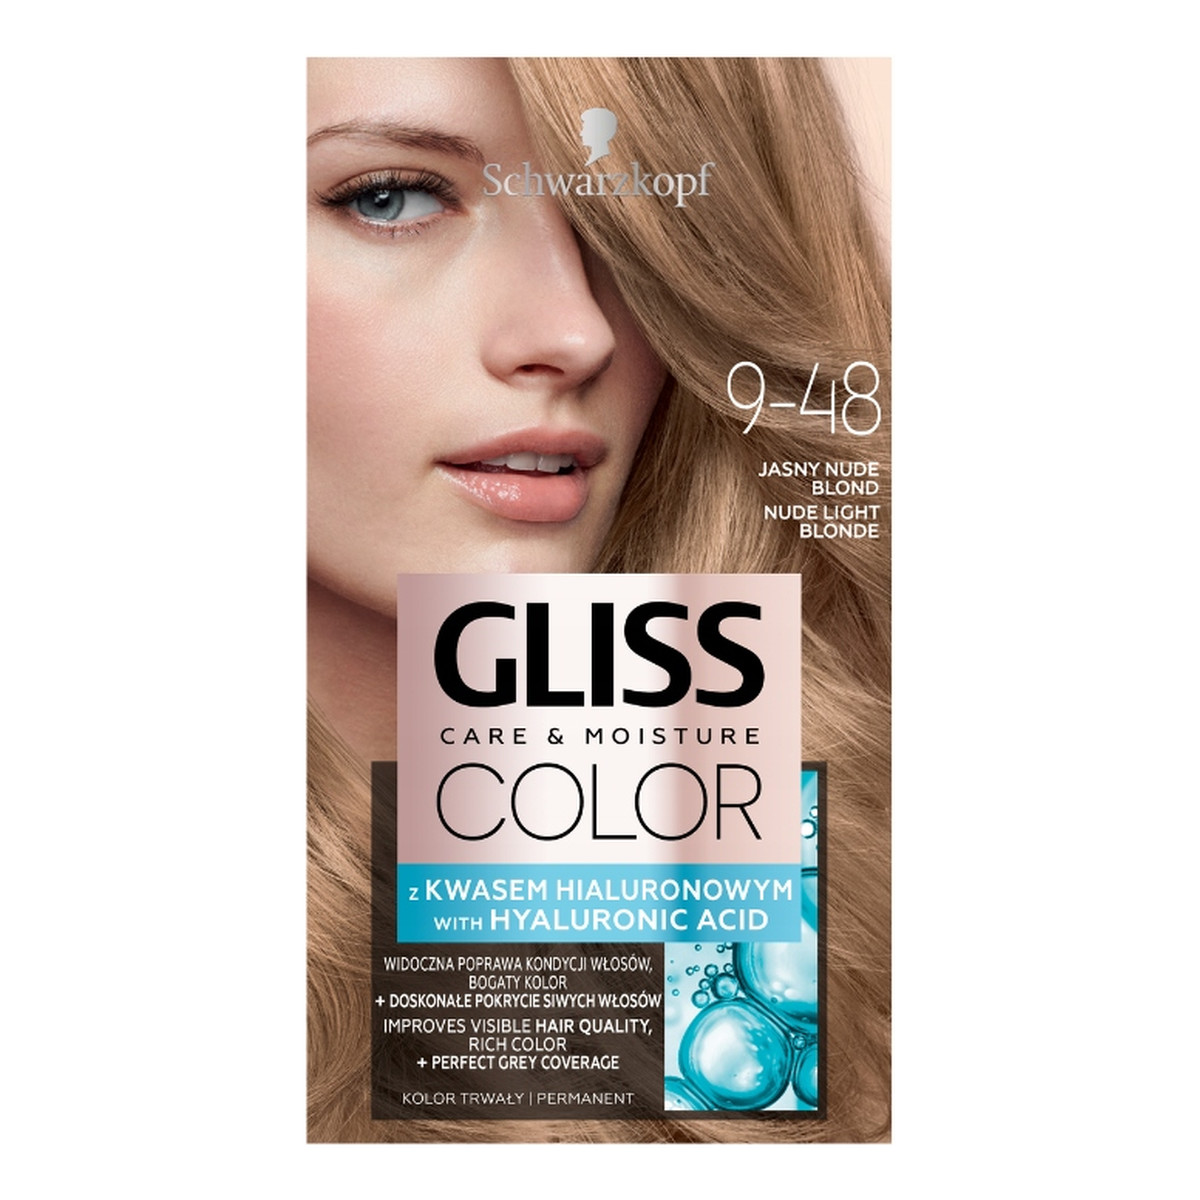 Gliss Color care & moisture farba do włosów 9-48 jasny nude blond